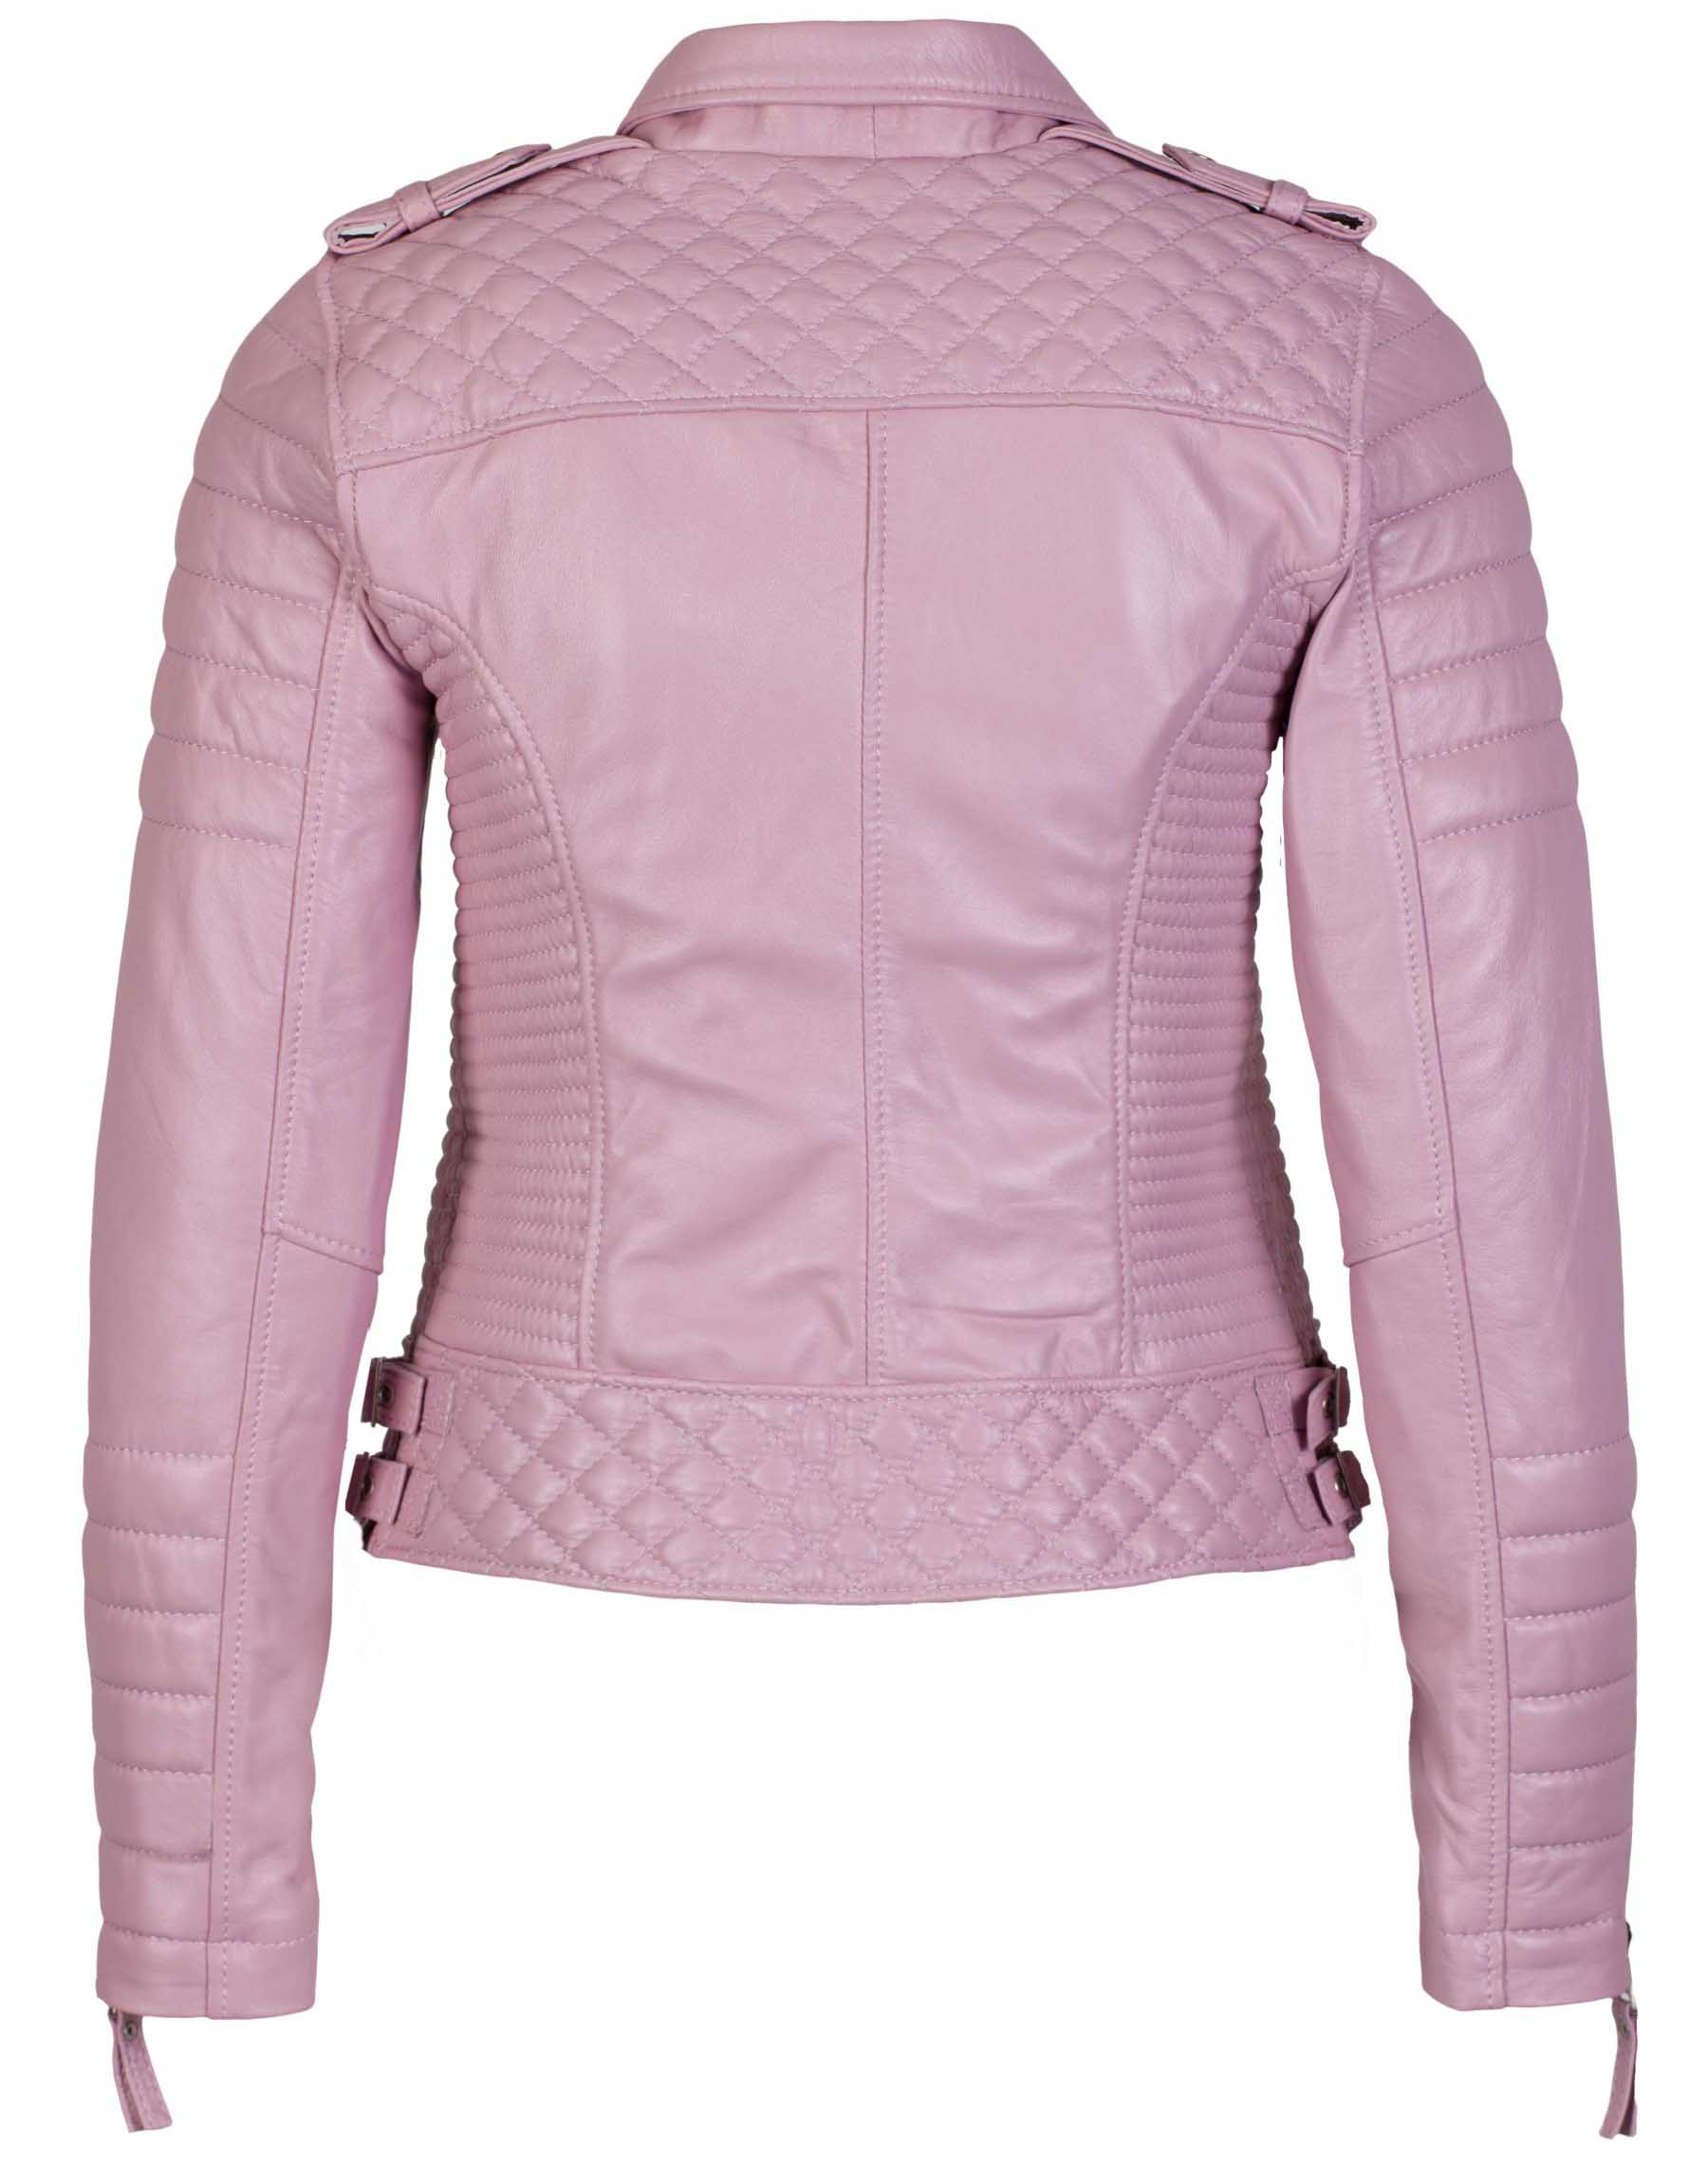 Women's Biker Leather Jacket Pink freeshipping - SkinOutfit